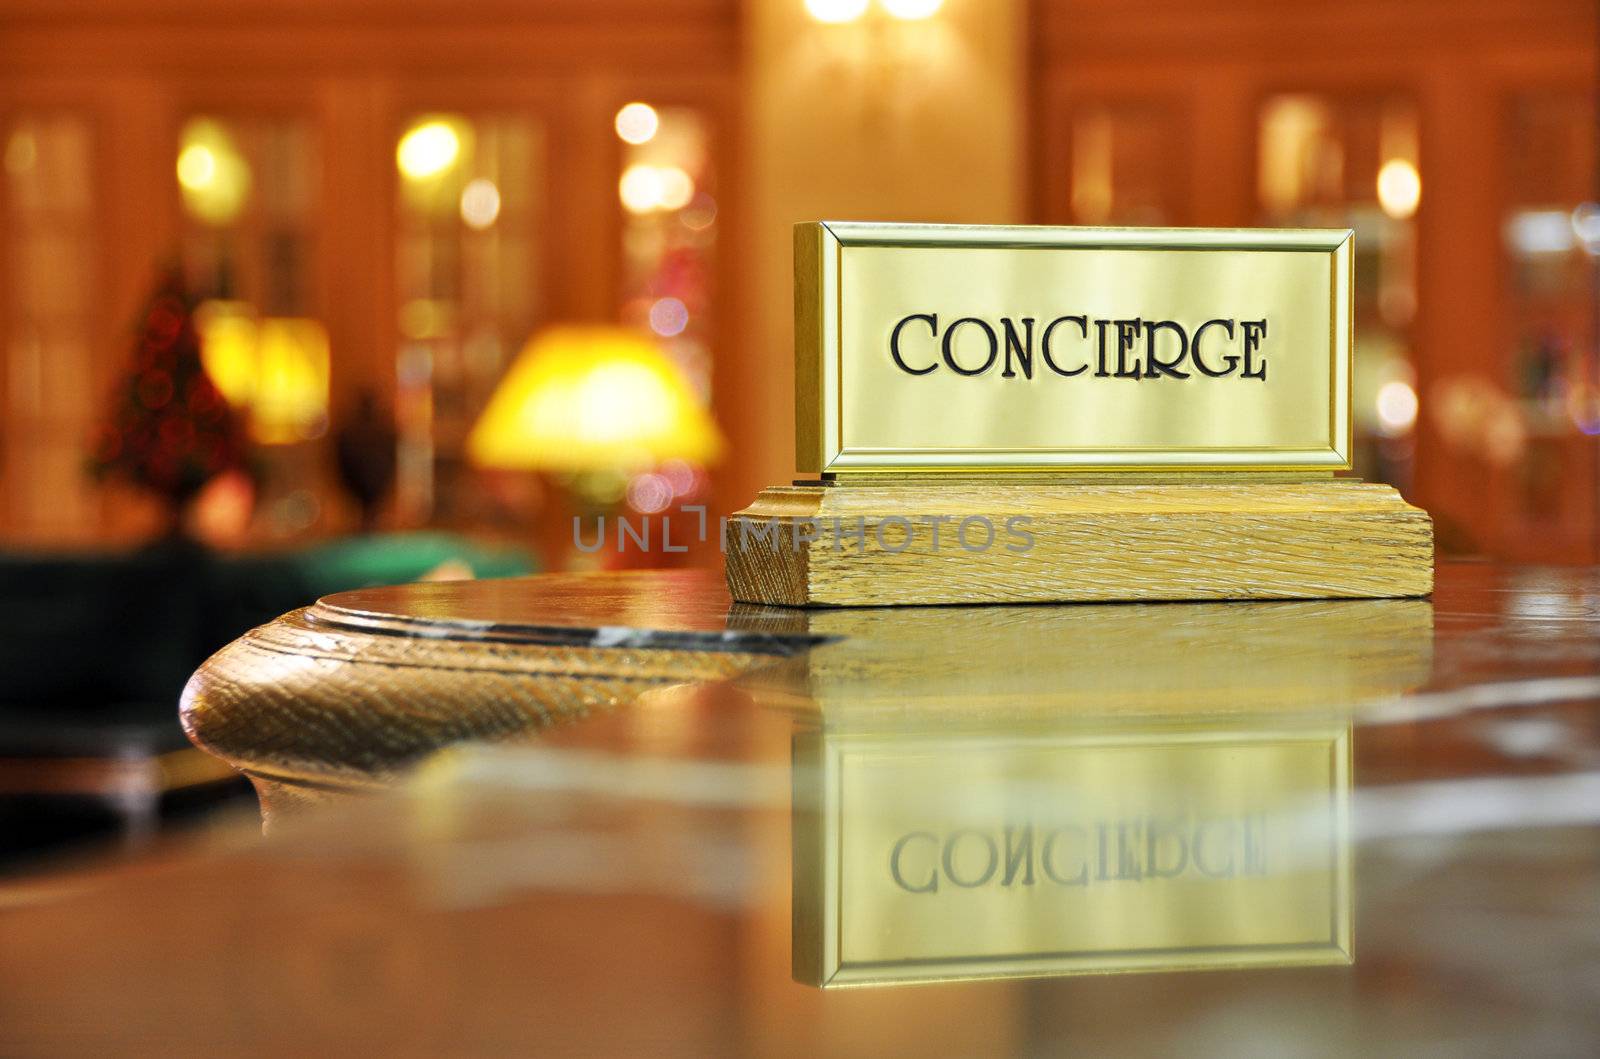 Concierge desk in a luxury hotel